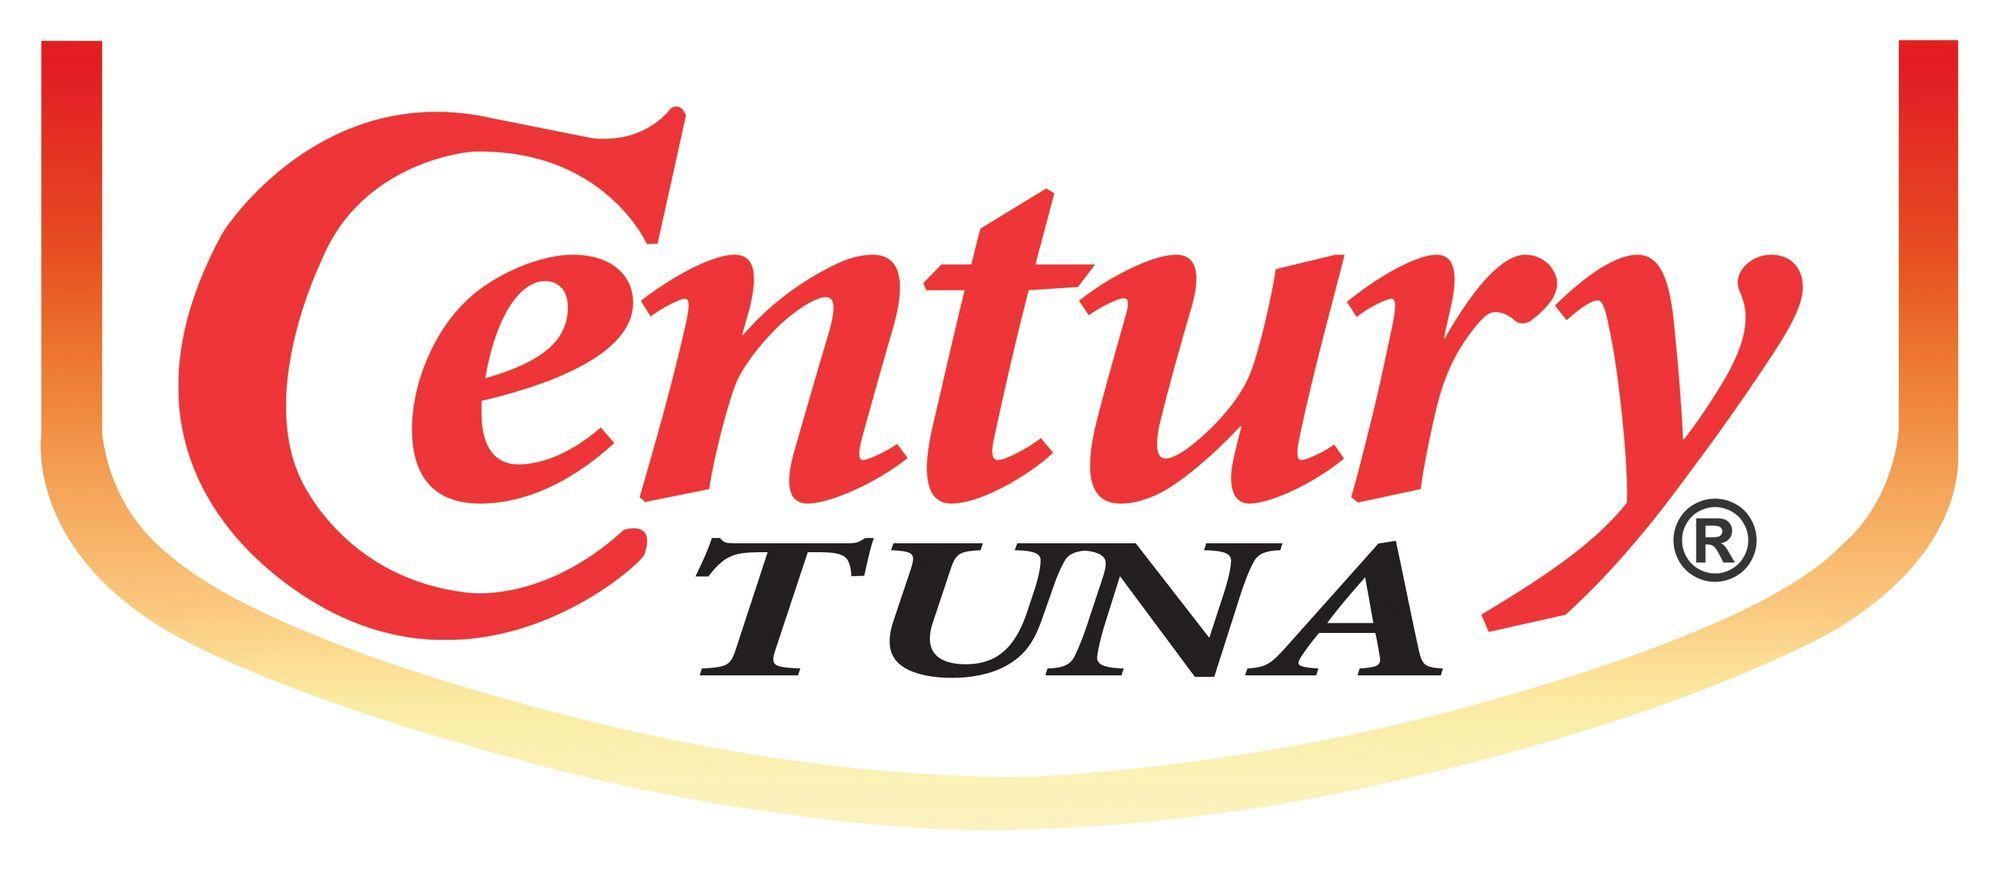 Century Logo - Century Tuna | Logopedia | FANDOM powered by Wikia